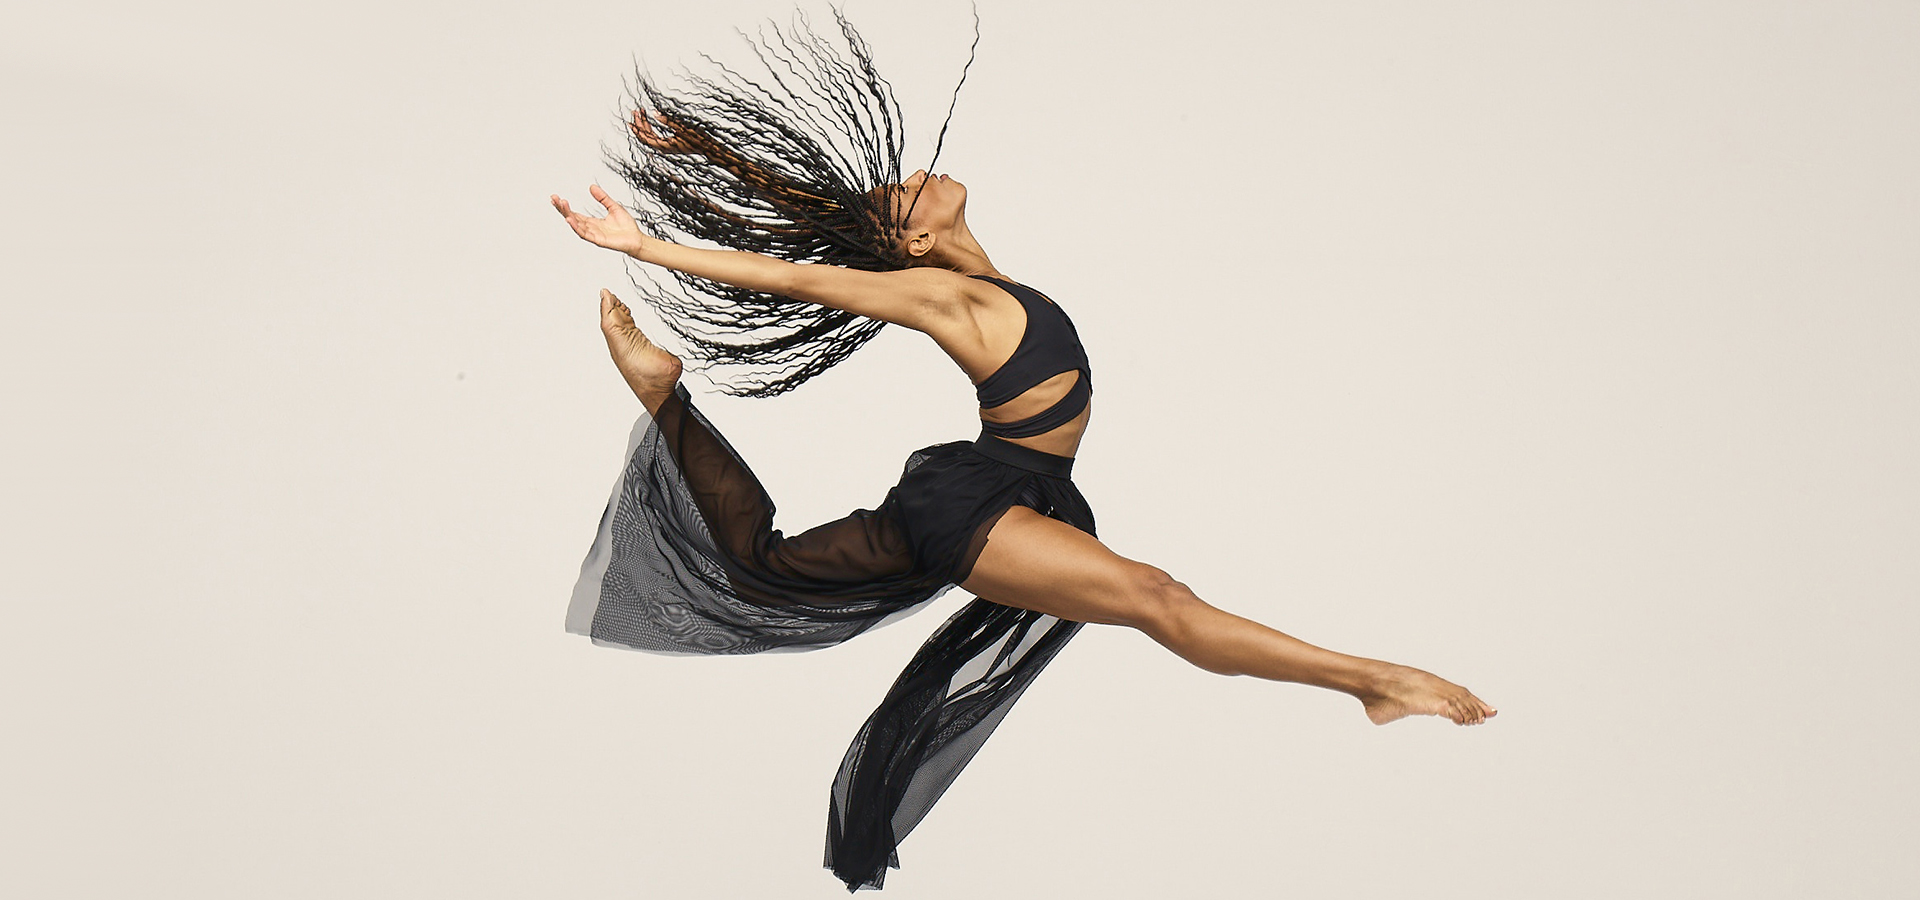 Alvin Ailey American Dance Theater dancer